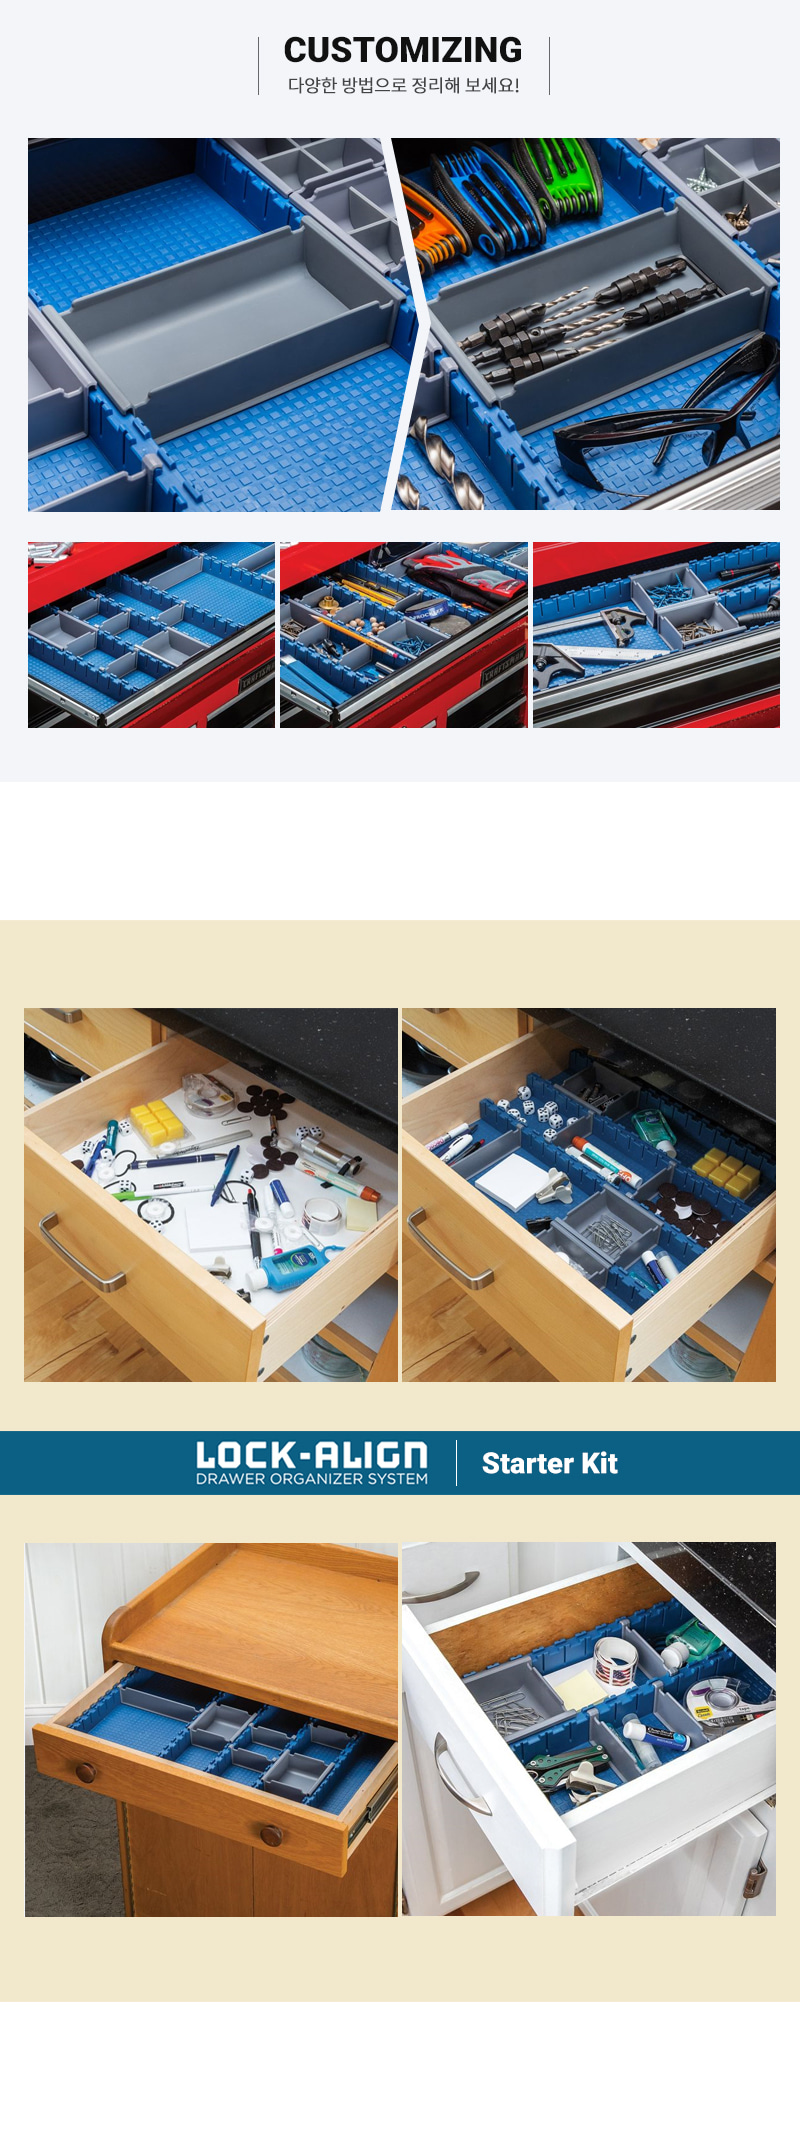 New Rockler Lock-Align Drawer Organization System